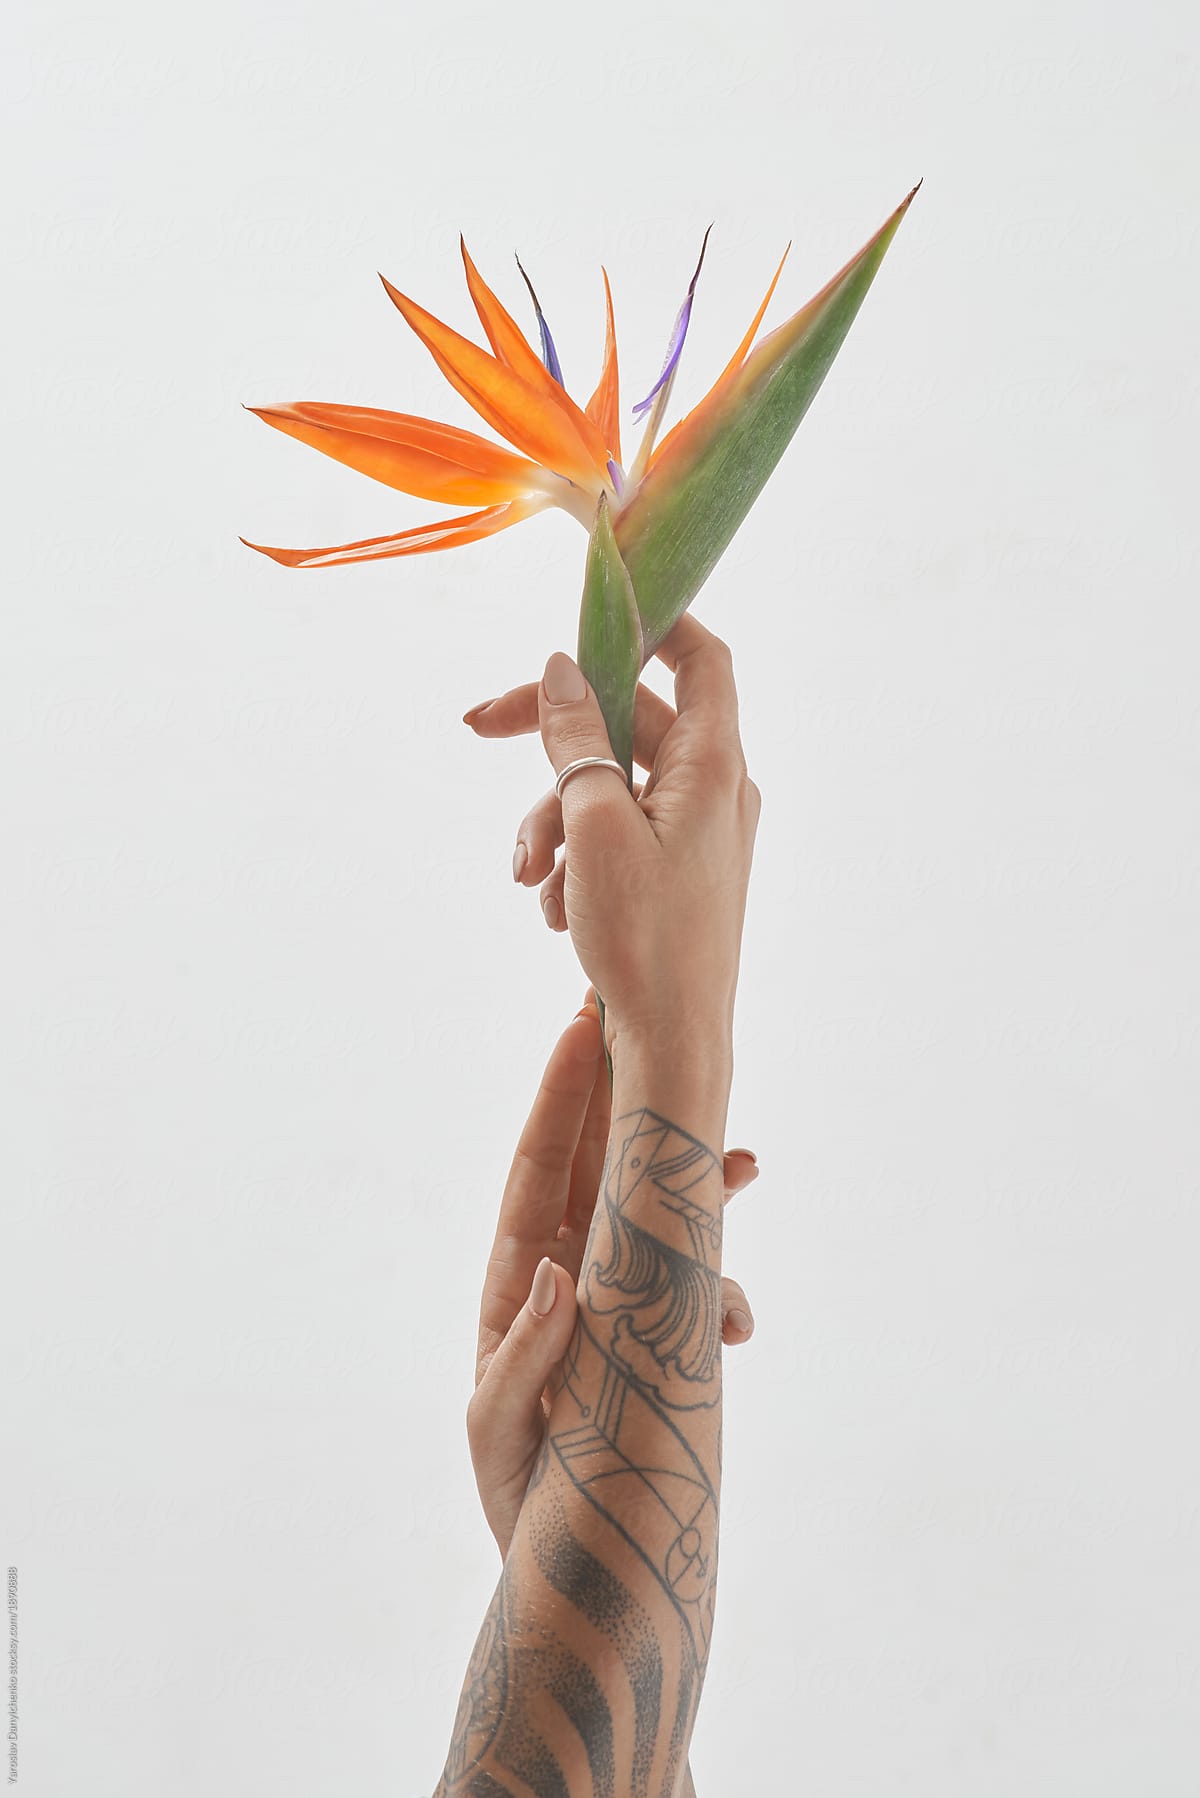 a female hand holds a orange flower strelitzia